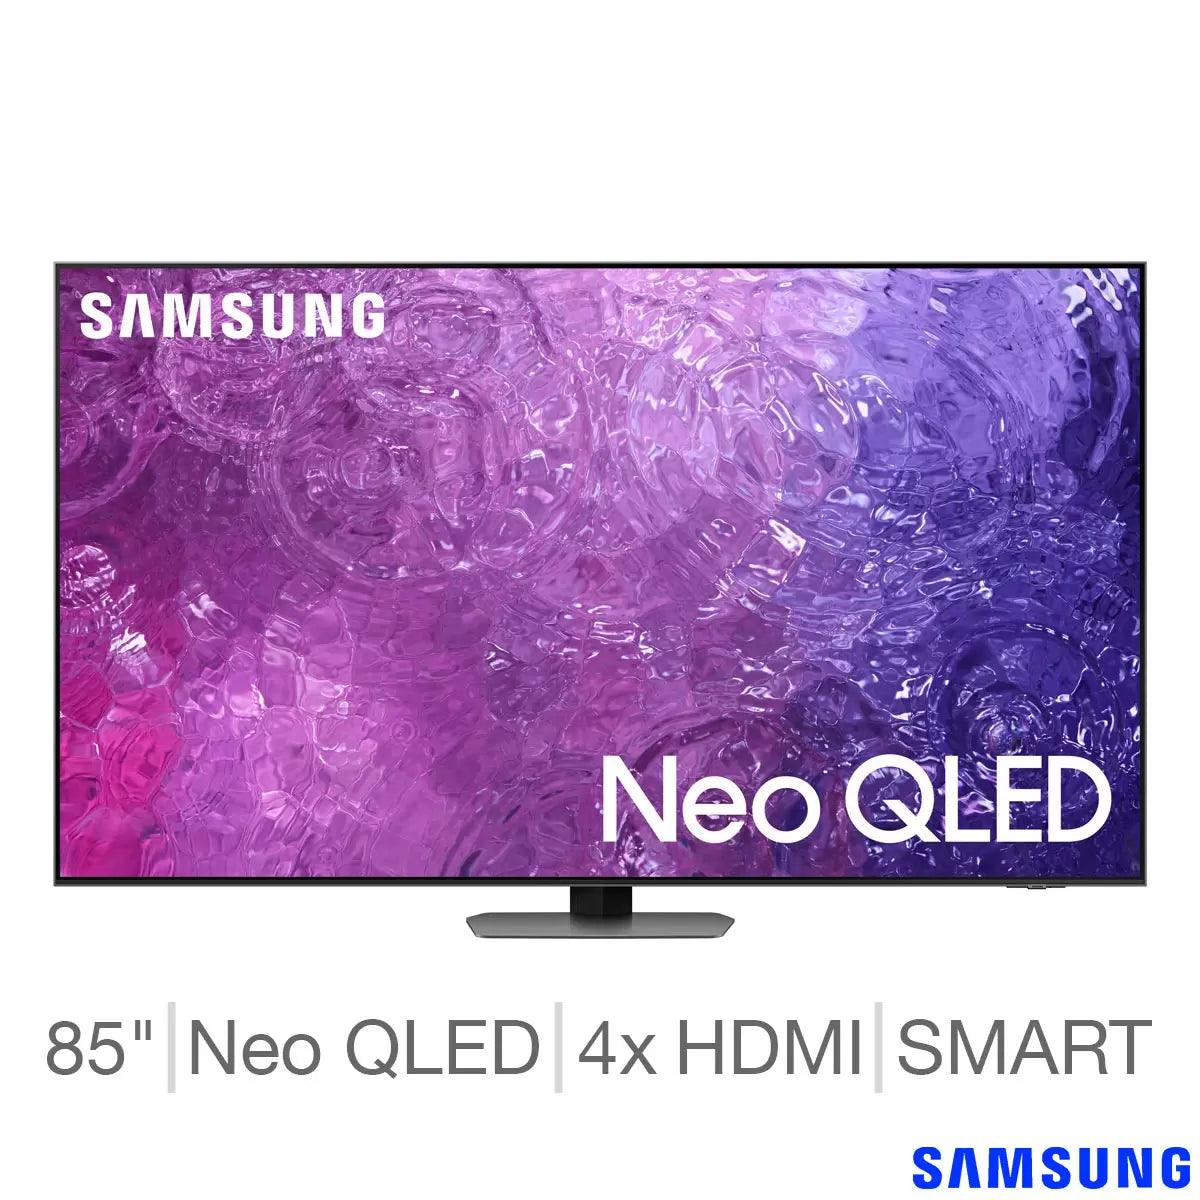 Samsung Neo QLED 4K Ultra HD Smart TV - 85 Inch - Posh Import